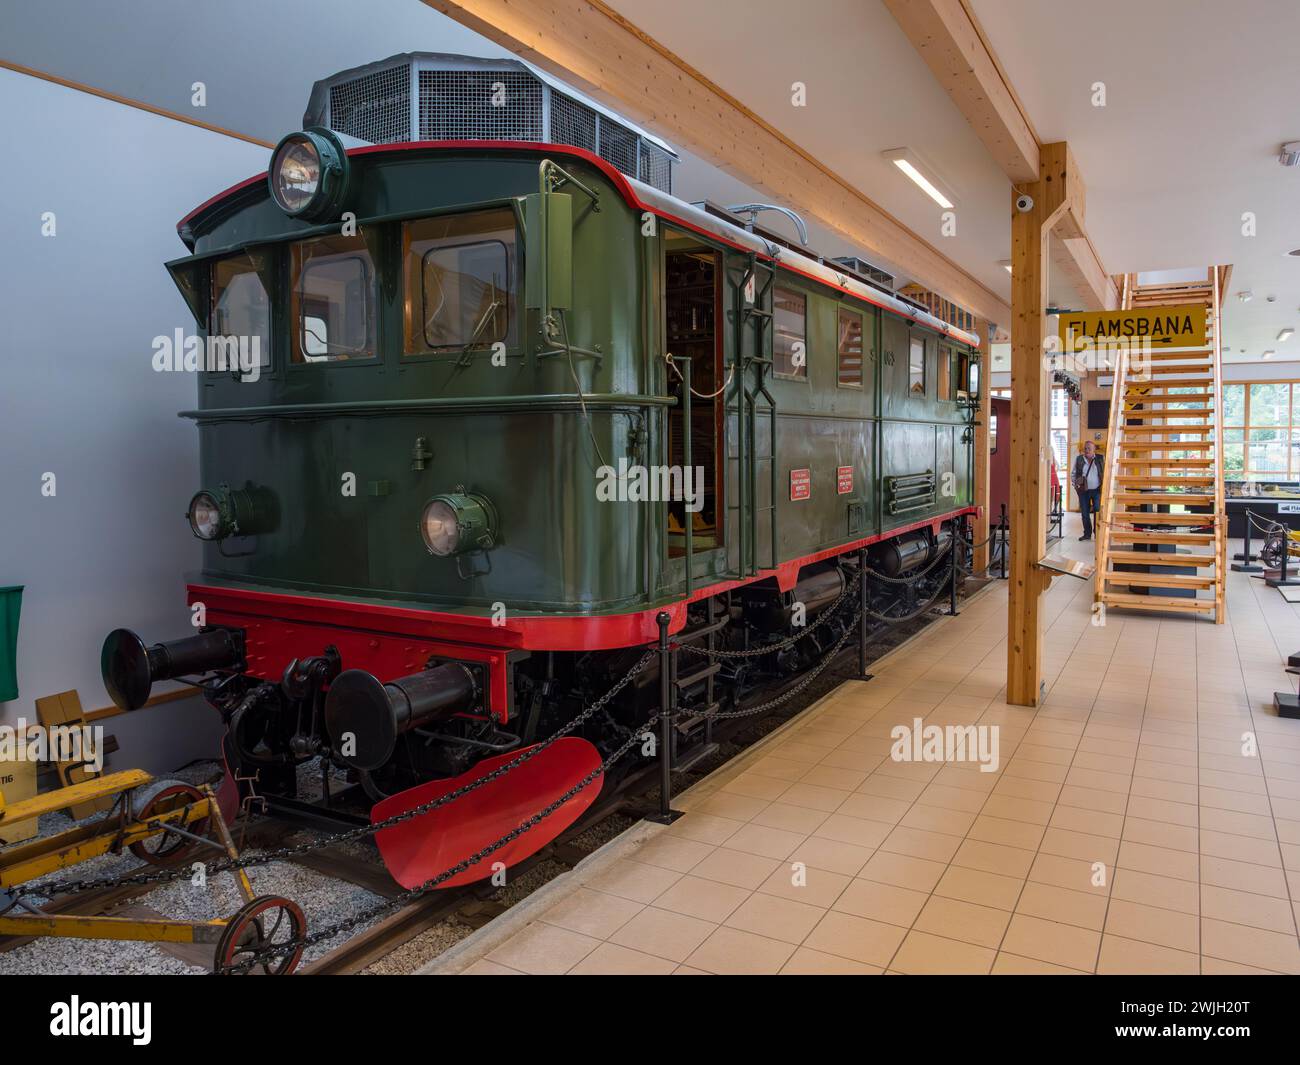 Una locomotiva elettrica El 9, costruita da Thune per le Ferrovie statali norvegesi, Flam Railway Museum (Flåmsbanamuseet / Flåm Railway Museum), Flåm, Norvegia. Foto Stock